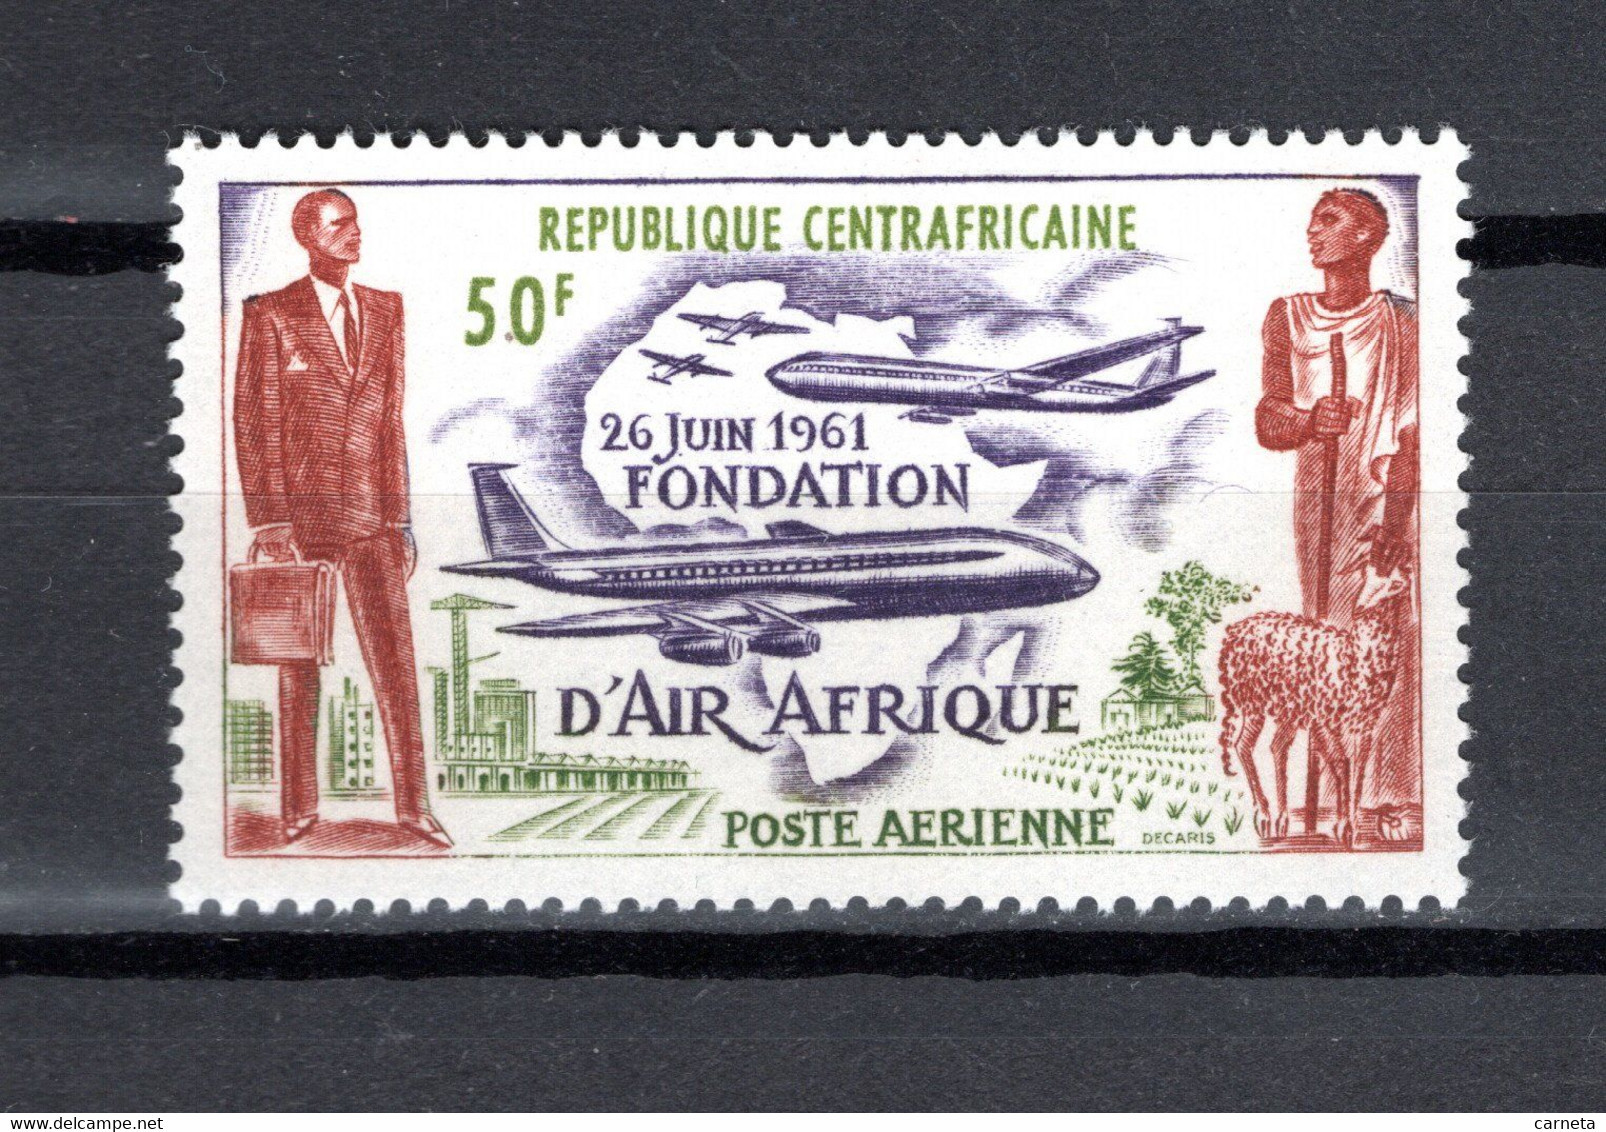 CENTRAFRIQUE PA N° 5 NEUF SANS CHARNIERE COTE 1.20€  AIR AFRIQUE - República Centroafricana